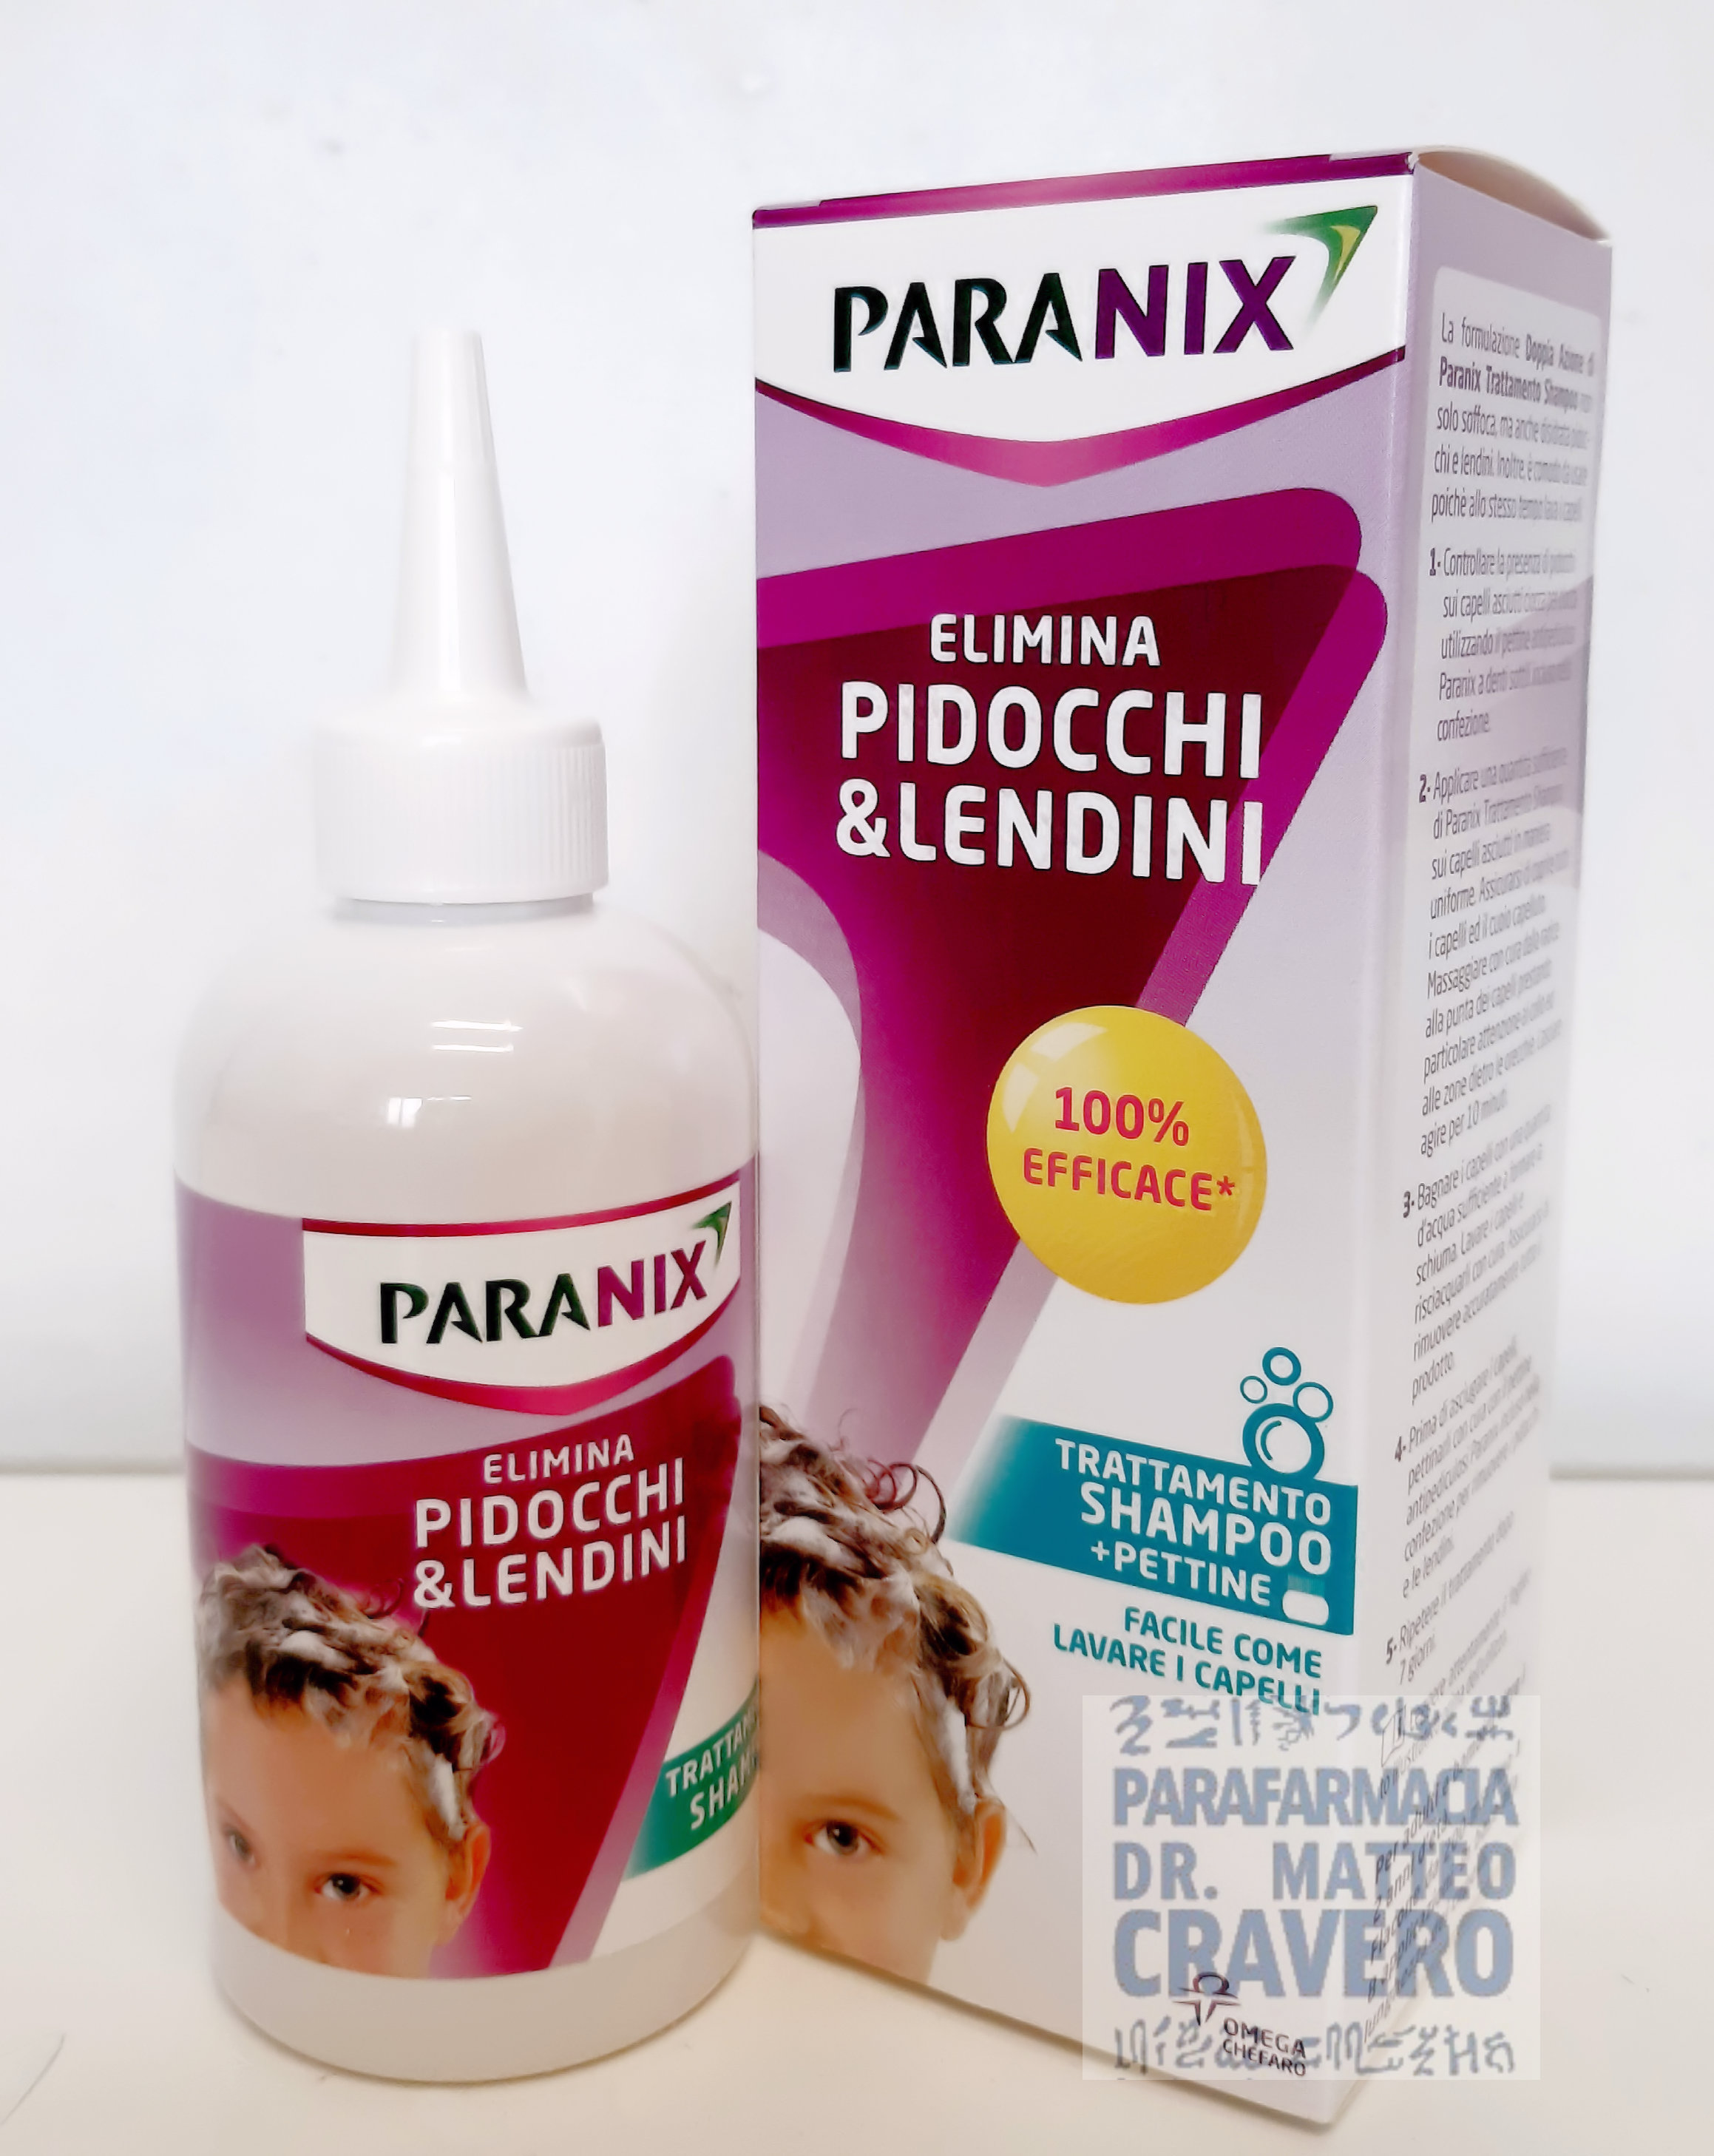 Paranix Shampoo Trattamento 200ml € 19,42 prezzo Parafarmacia Cravero